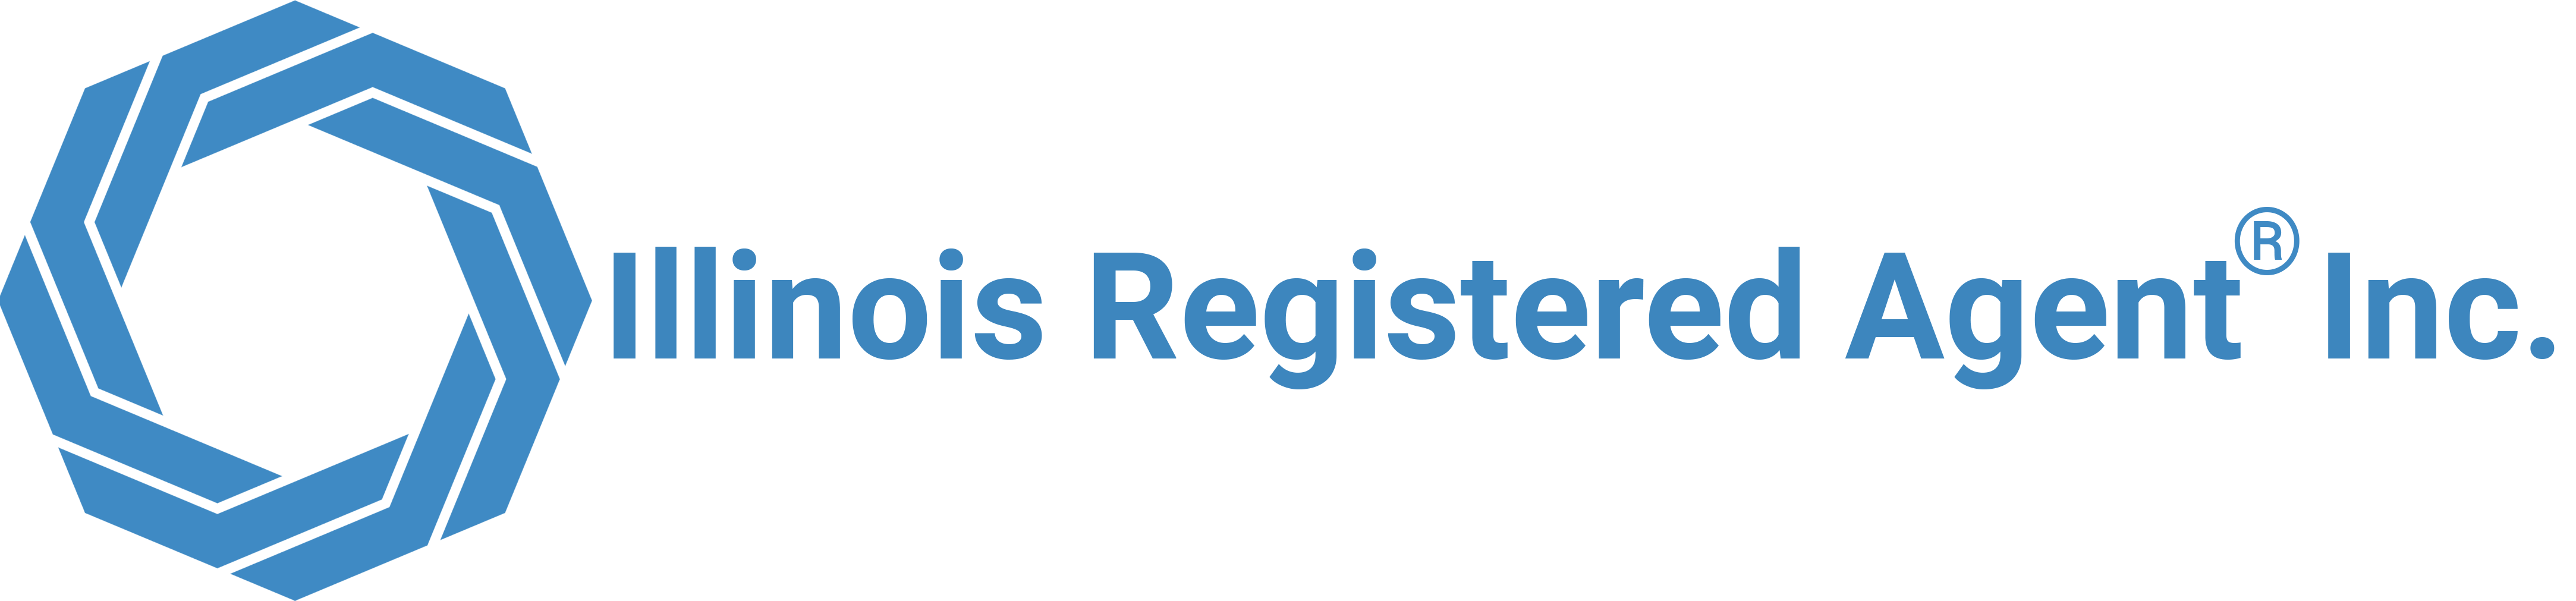 Illinois Registered Agent ® Inc.